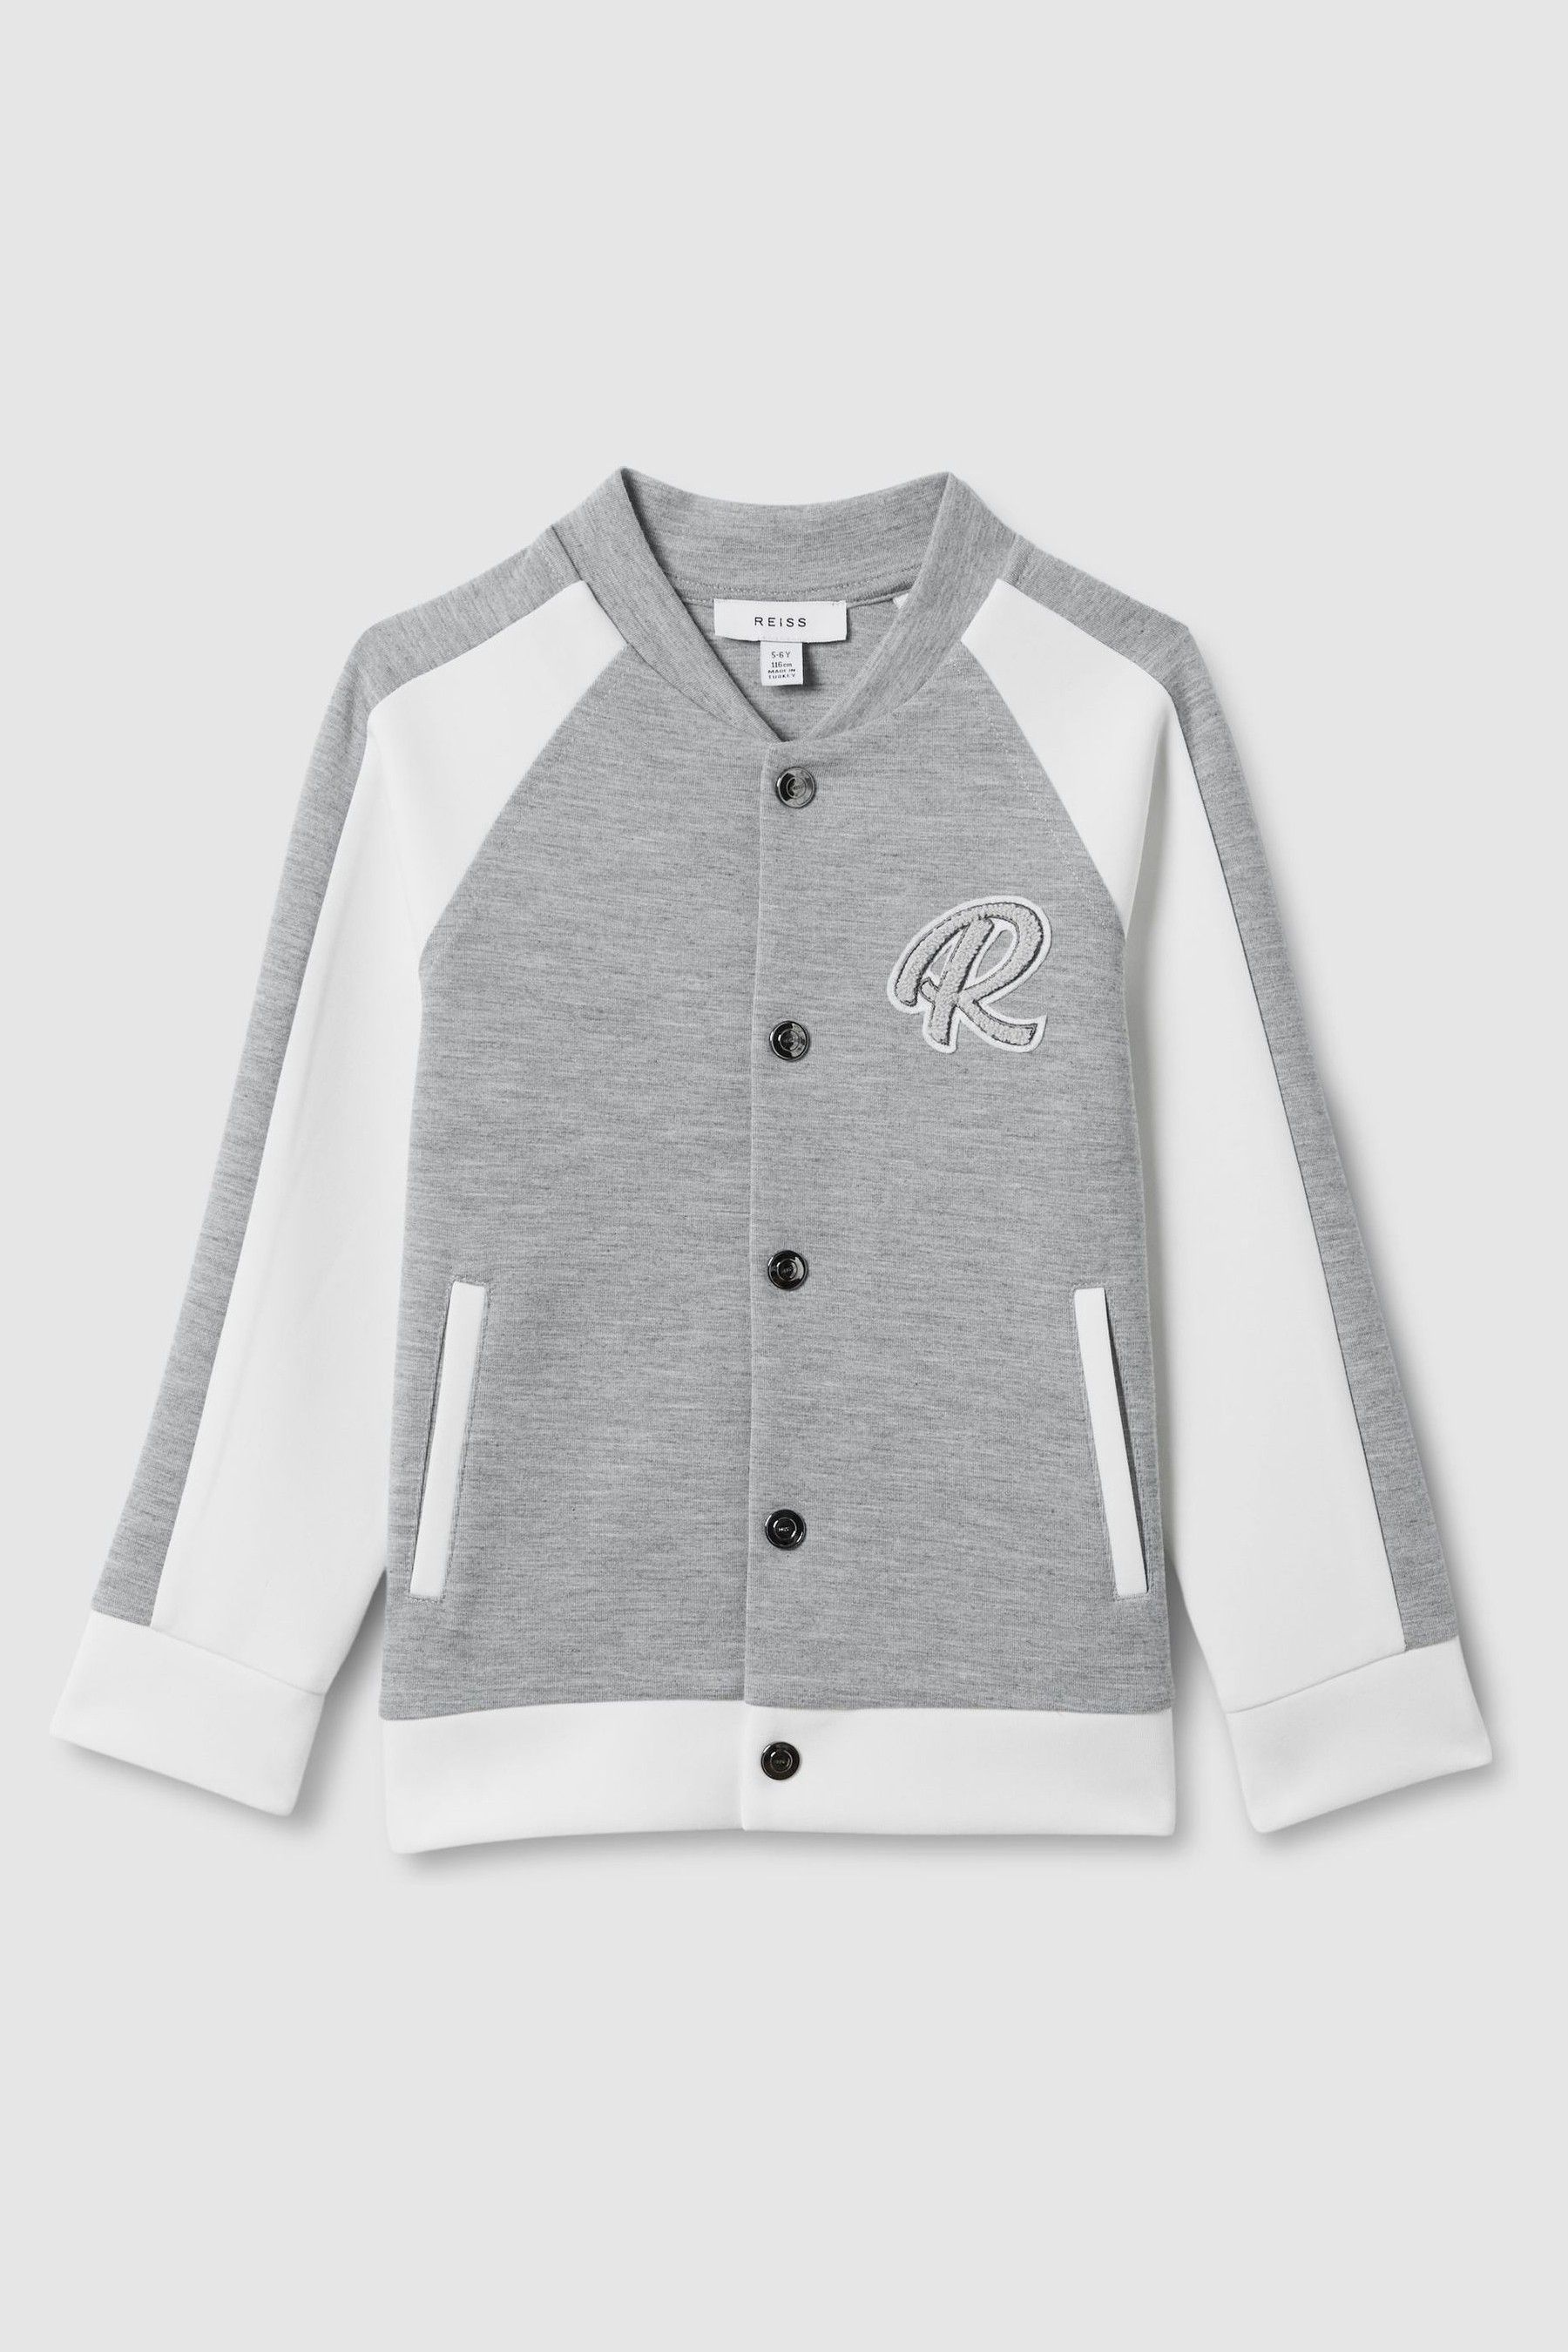 Reiss Pelham - Soft Grey/white Teen Jersey Varsity Jacket, Uk 13-14 Yrs